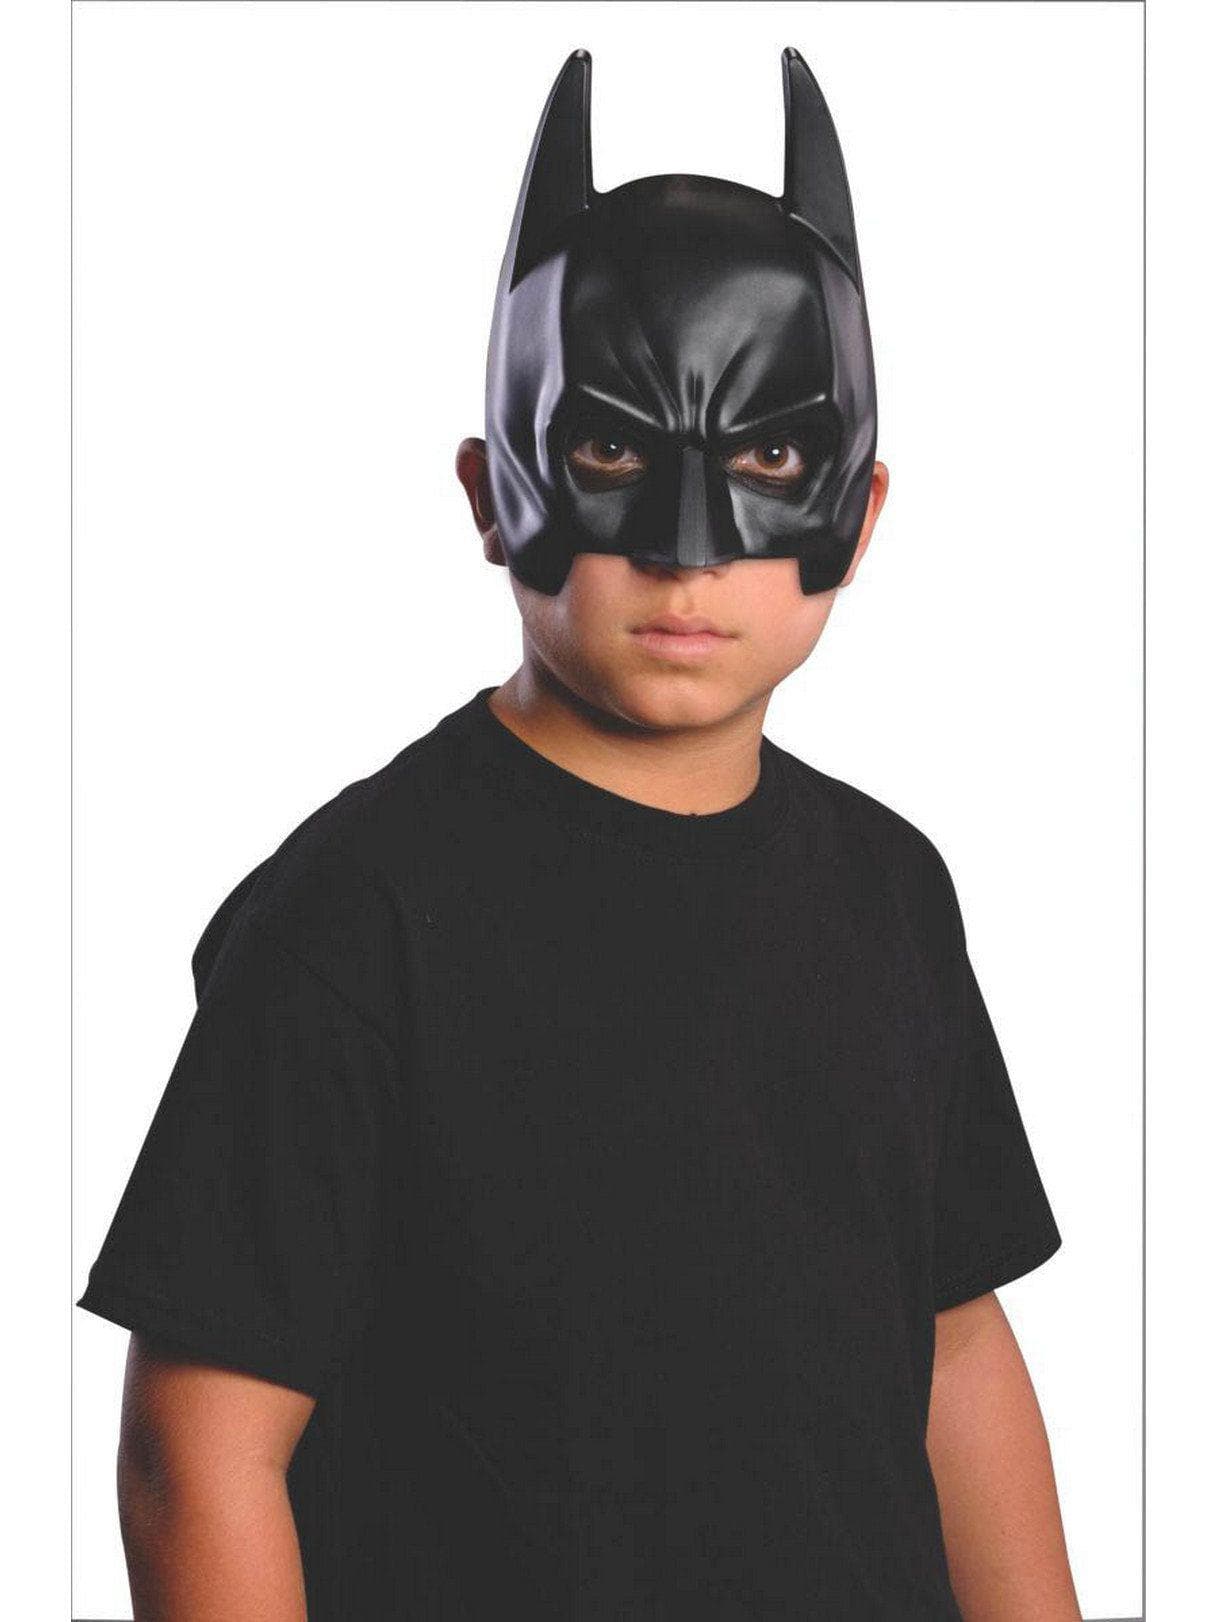 Boys' The Dark Knight Batman Mask - costumes.com